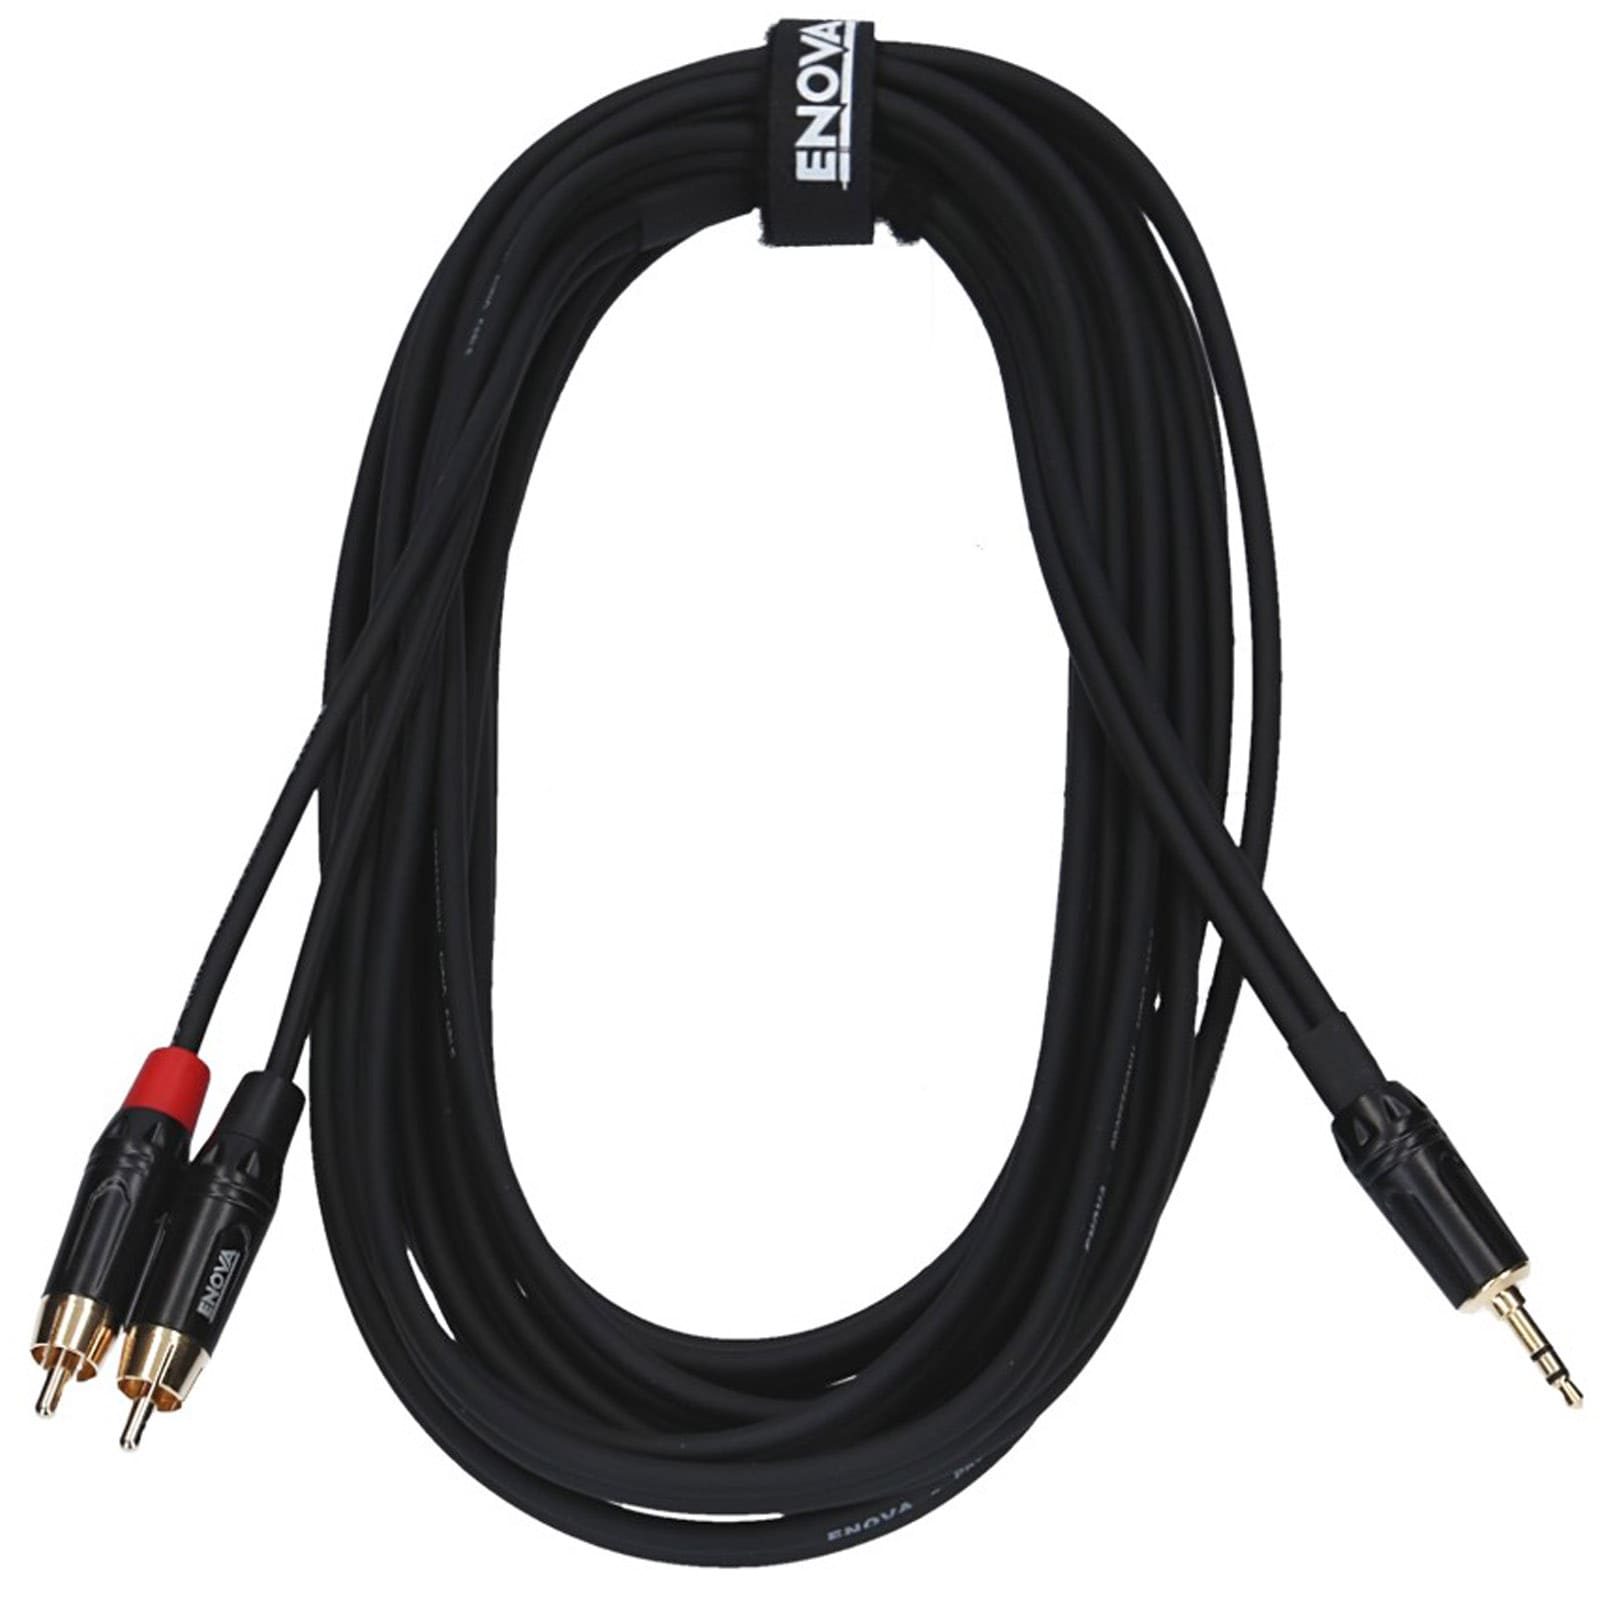 INECK® câble adaptateur RCA/jack - RCA mâle à jack femelle 3,5 mm -  Adaptateur audio